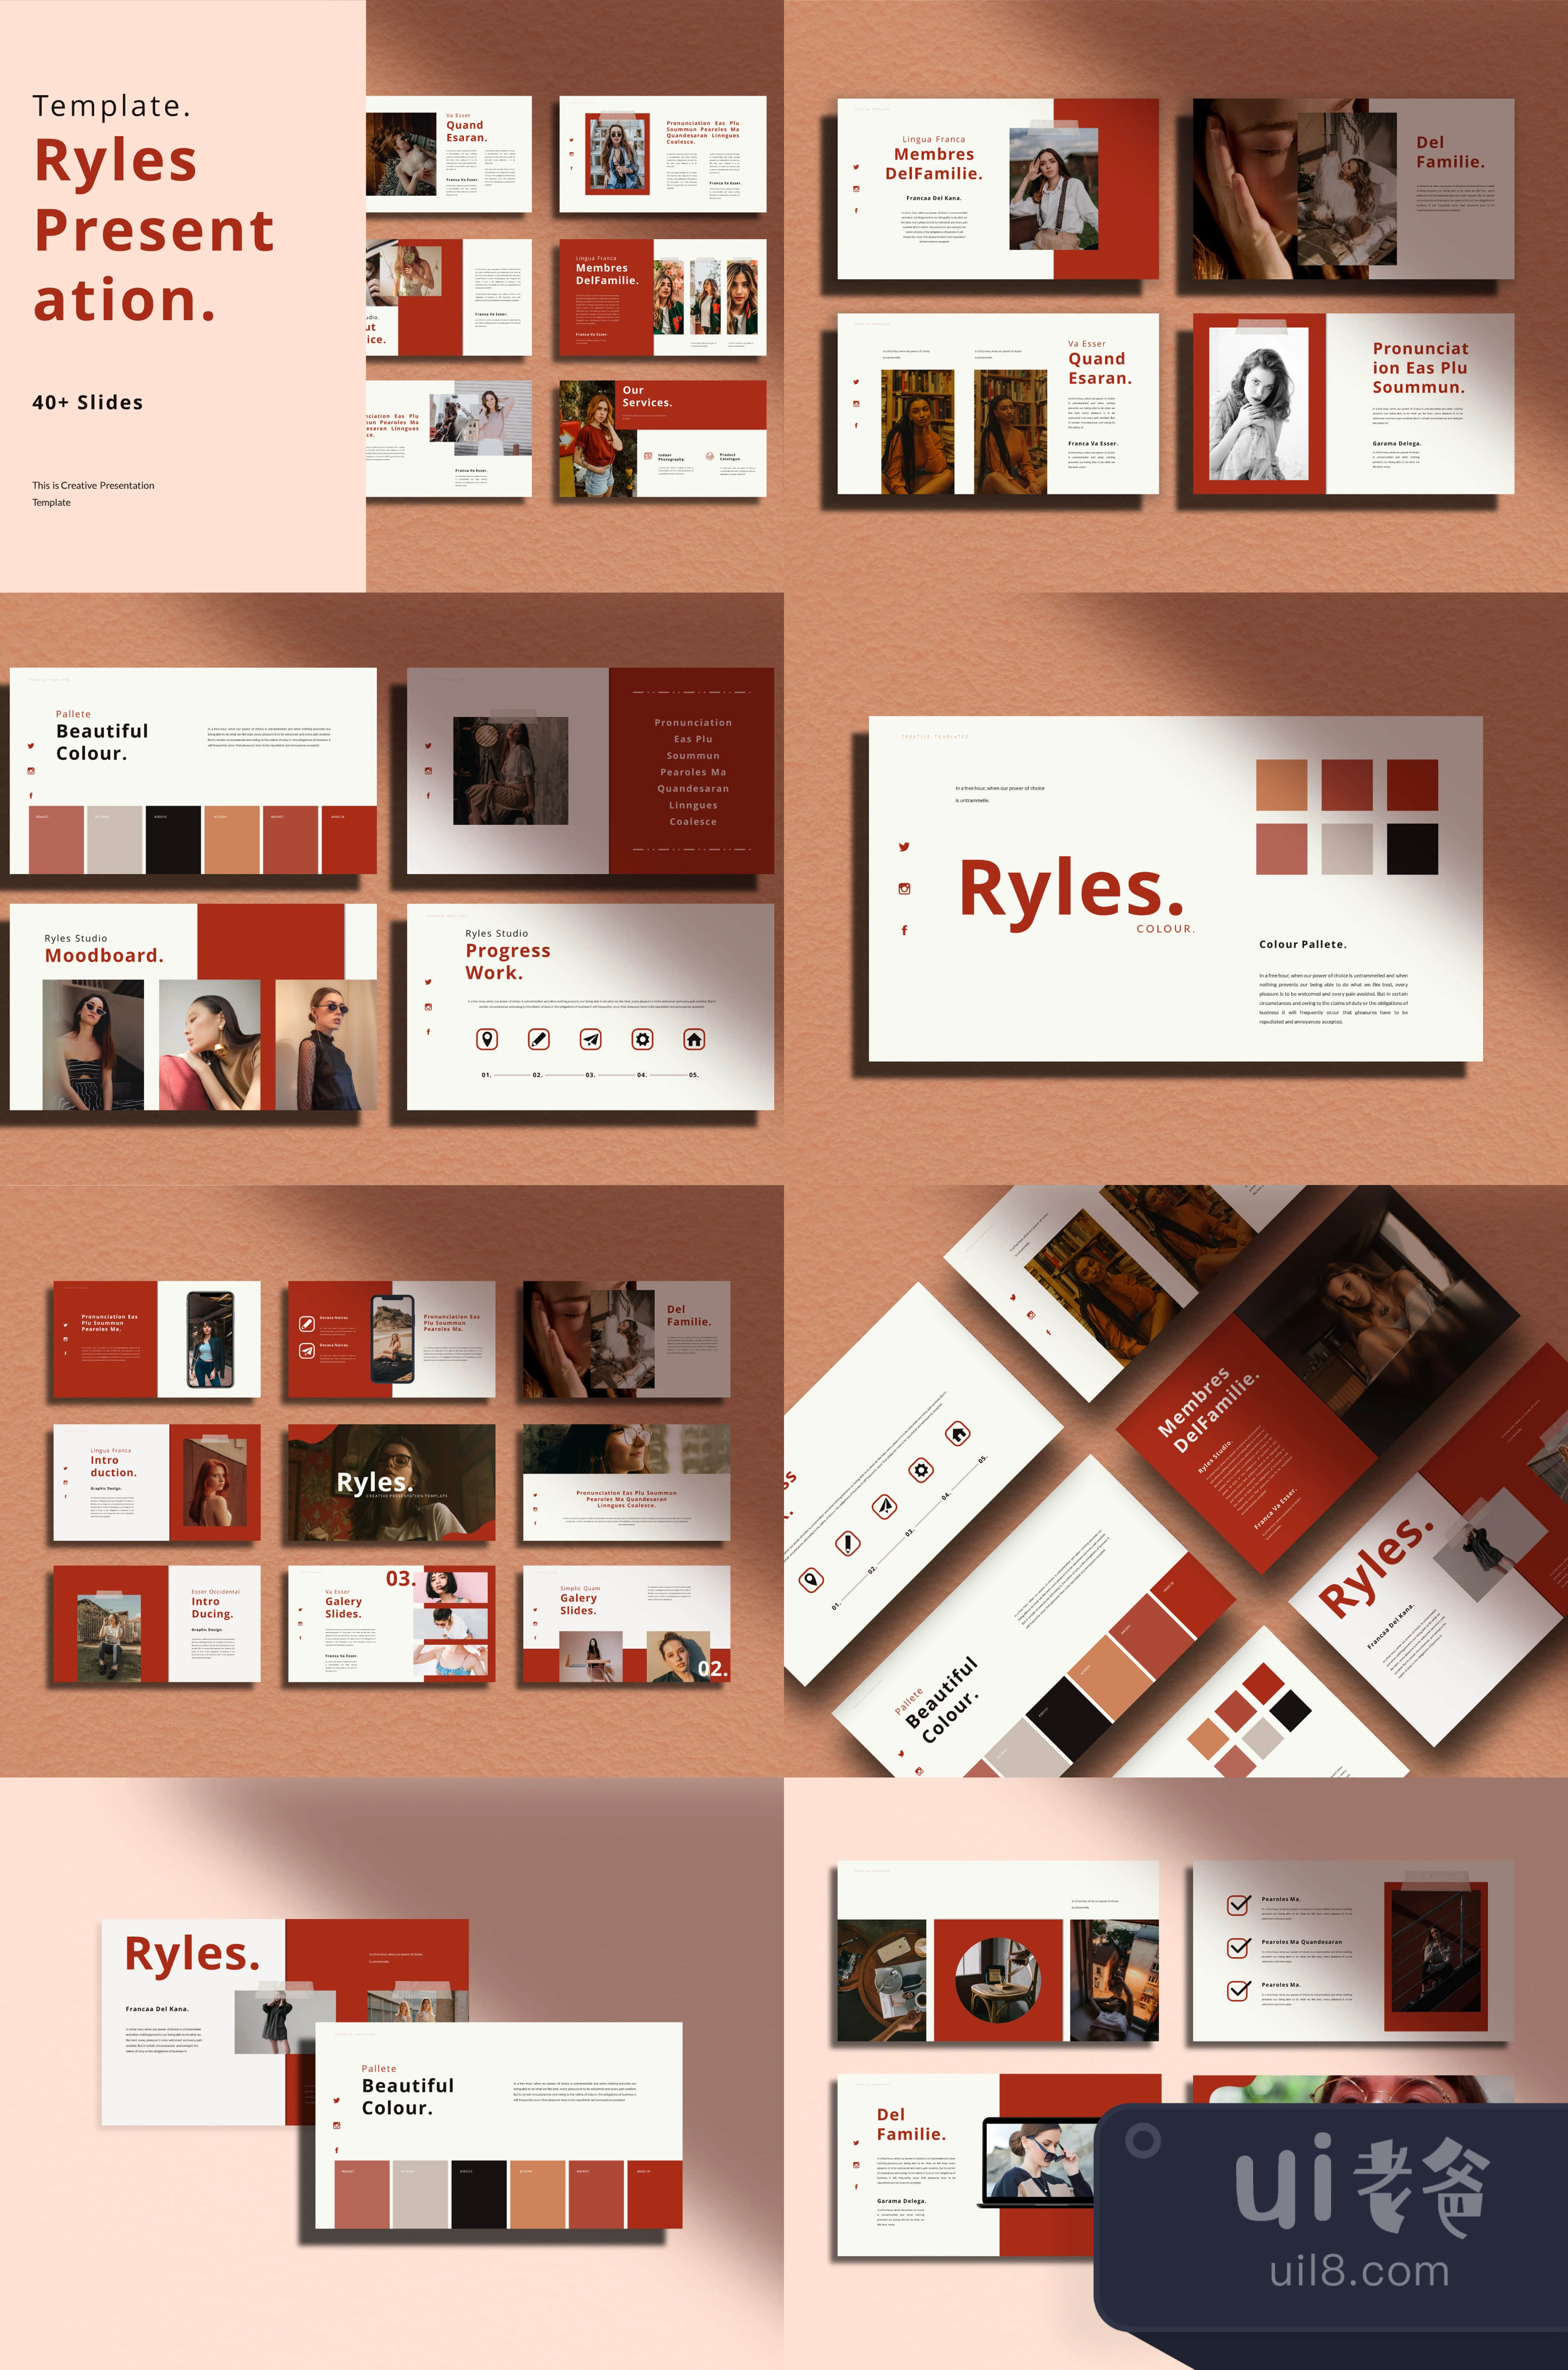 Ryles - PowerPoint模板 (Ryles - PowerPoint Template)插图1